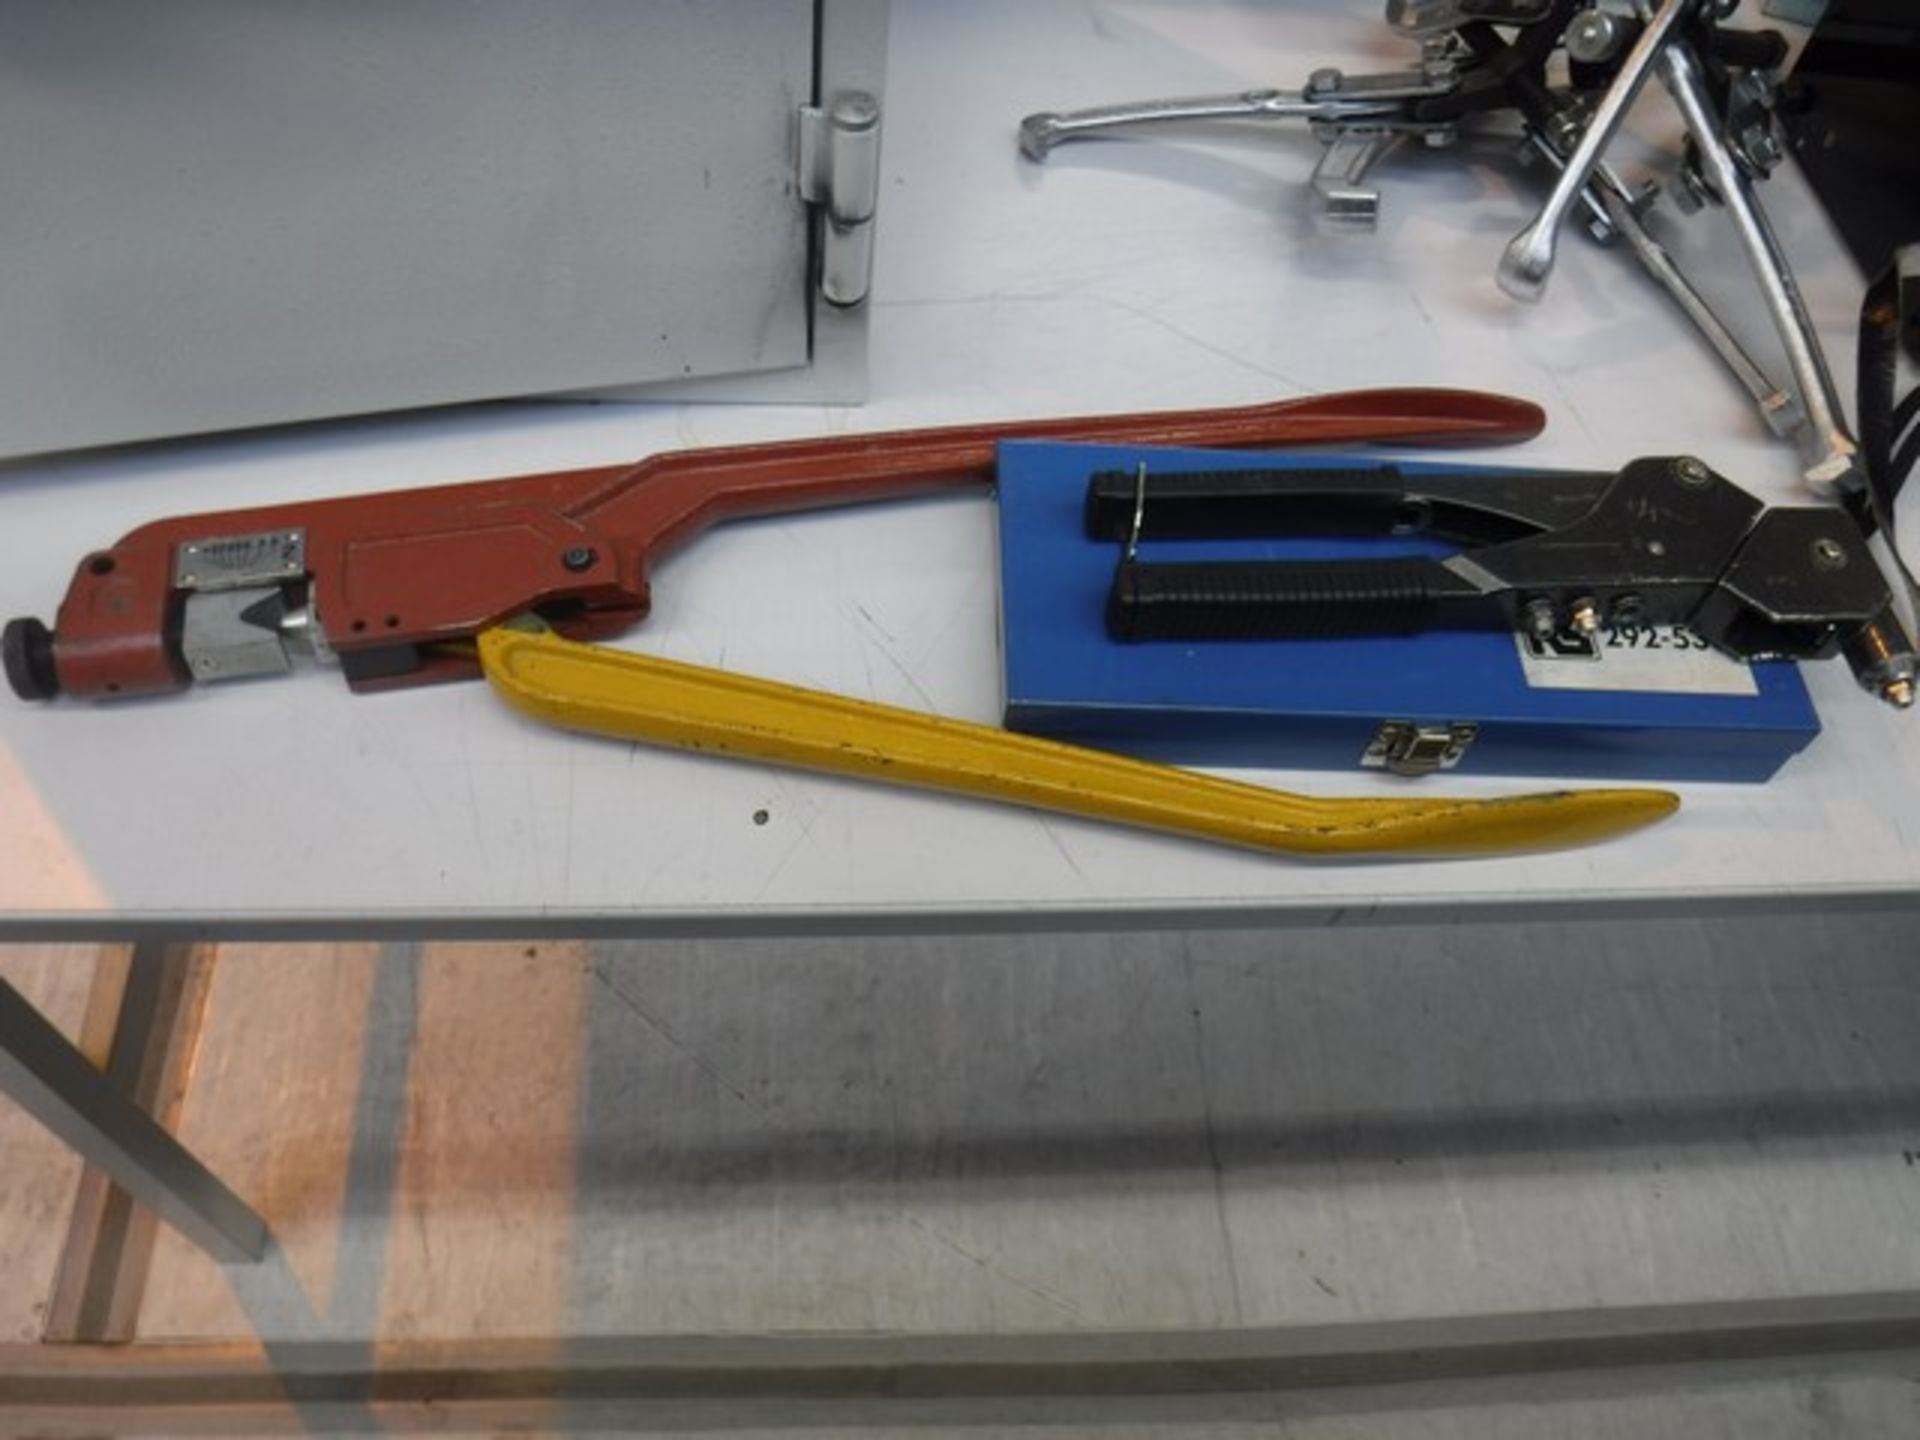 Pot rivet guns x2 and jointing tool